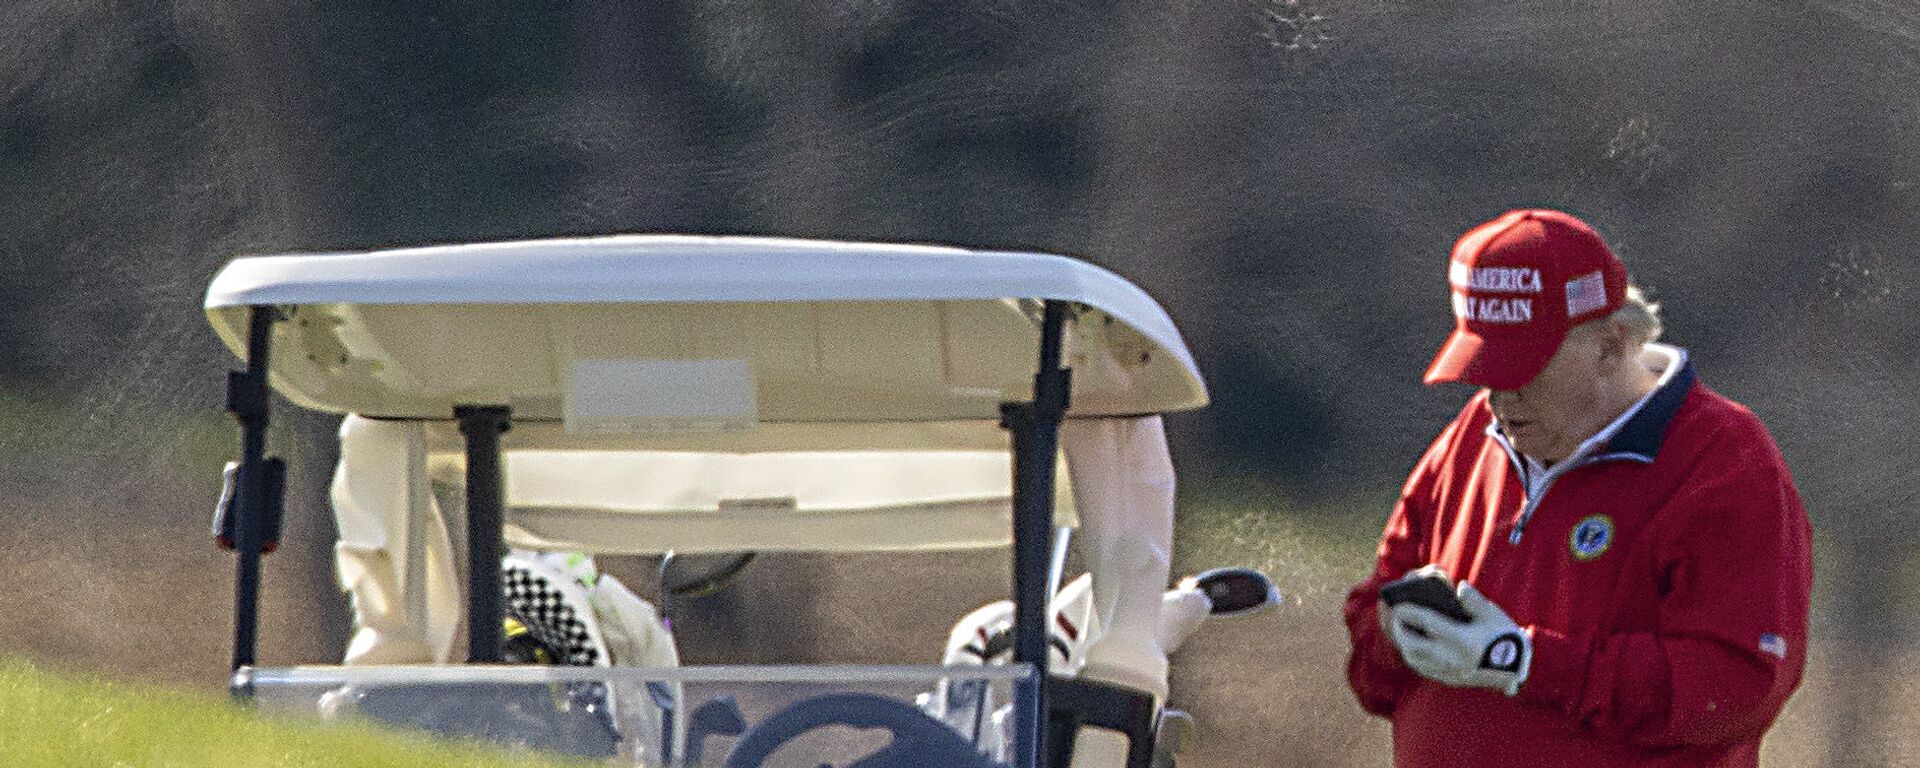 US President Donald Trump makes a phone call as he golfs at Trump National Golf Club on 26 November 2020 in Sterling, Virginia. - Sputnik International, 1920, 02.04.2021